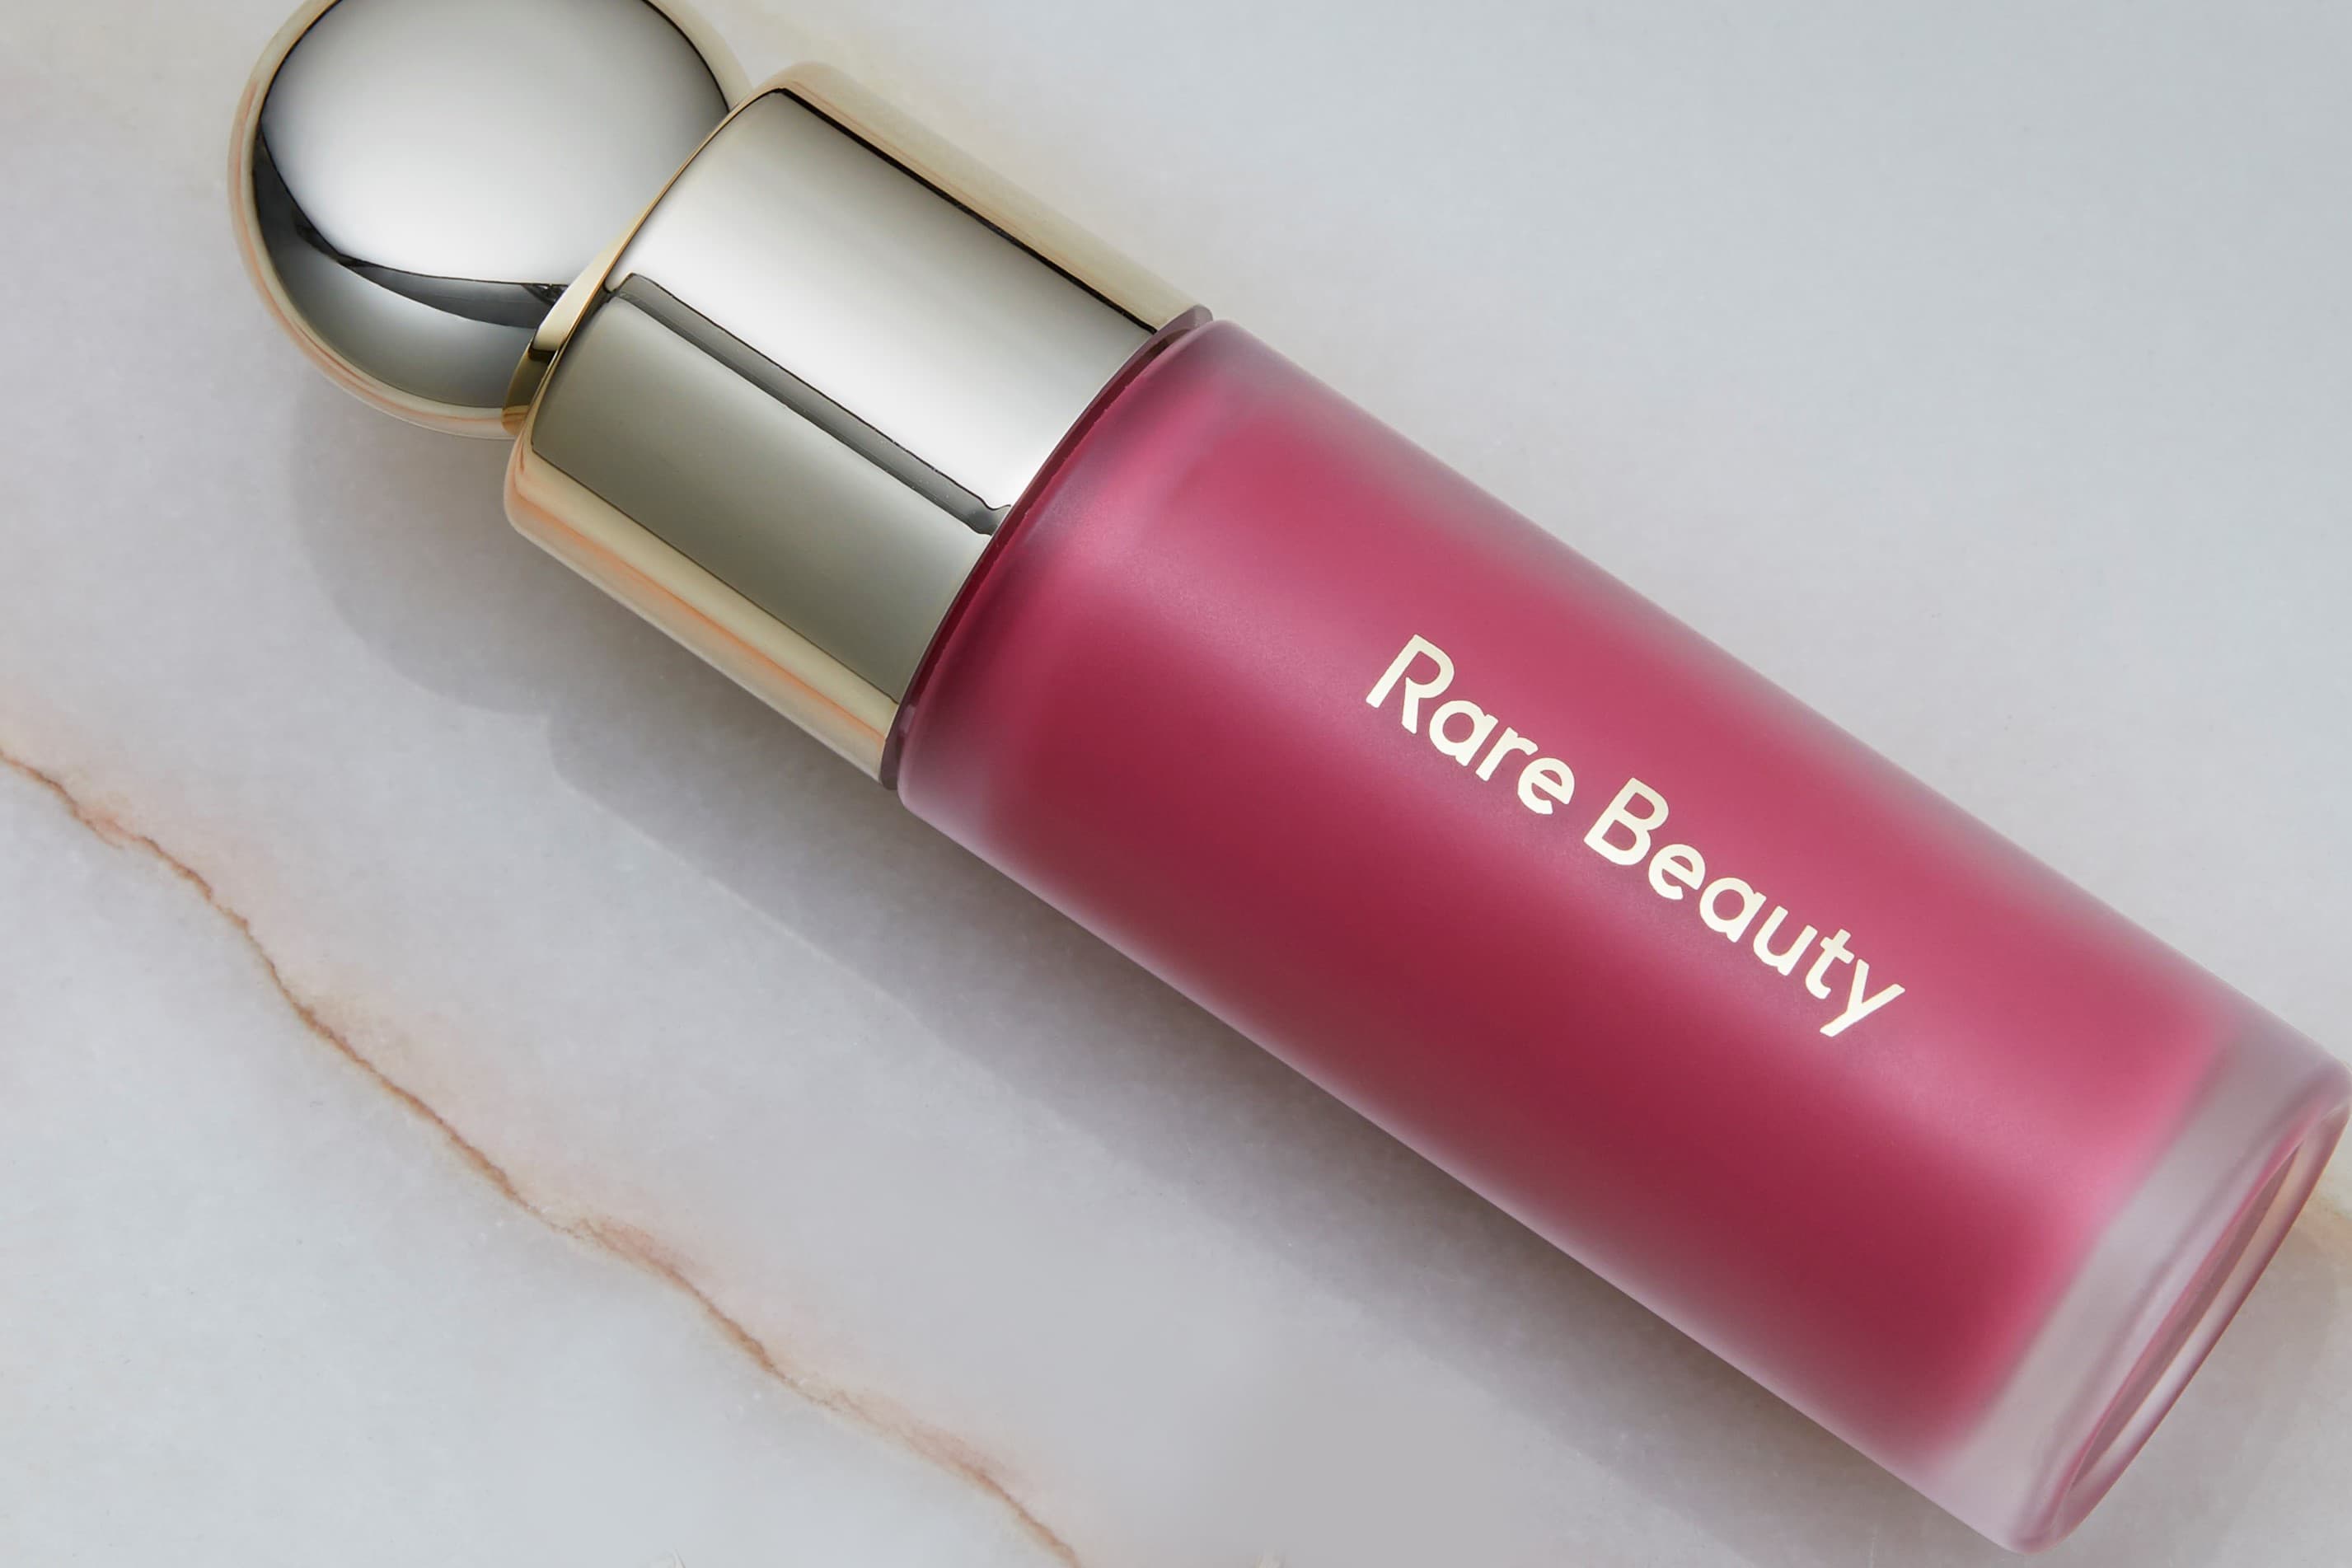 Rare Beauty Soft Pinch Liquid Blush Review | Space NK